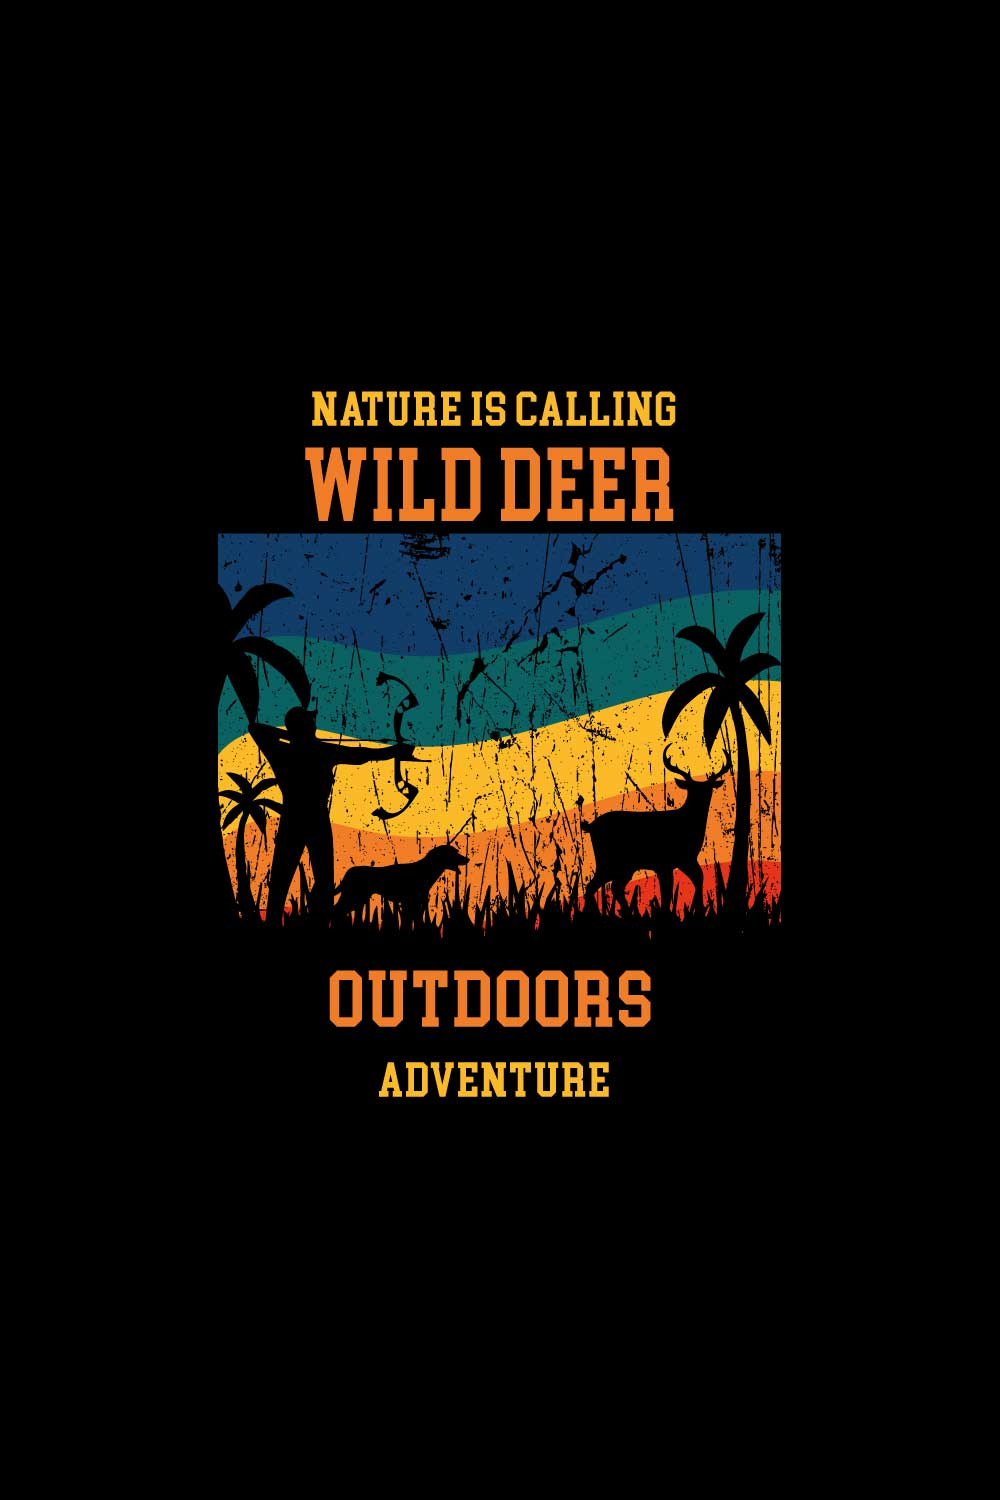 Nature Is Calling Wild Deer Outdoors Adventure pinterest preview image.